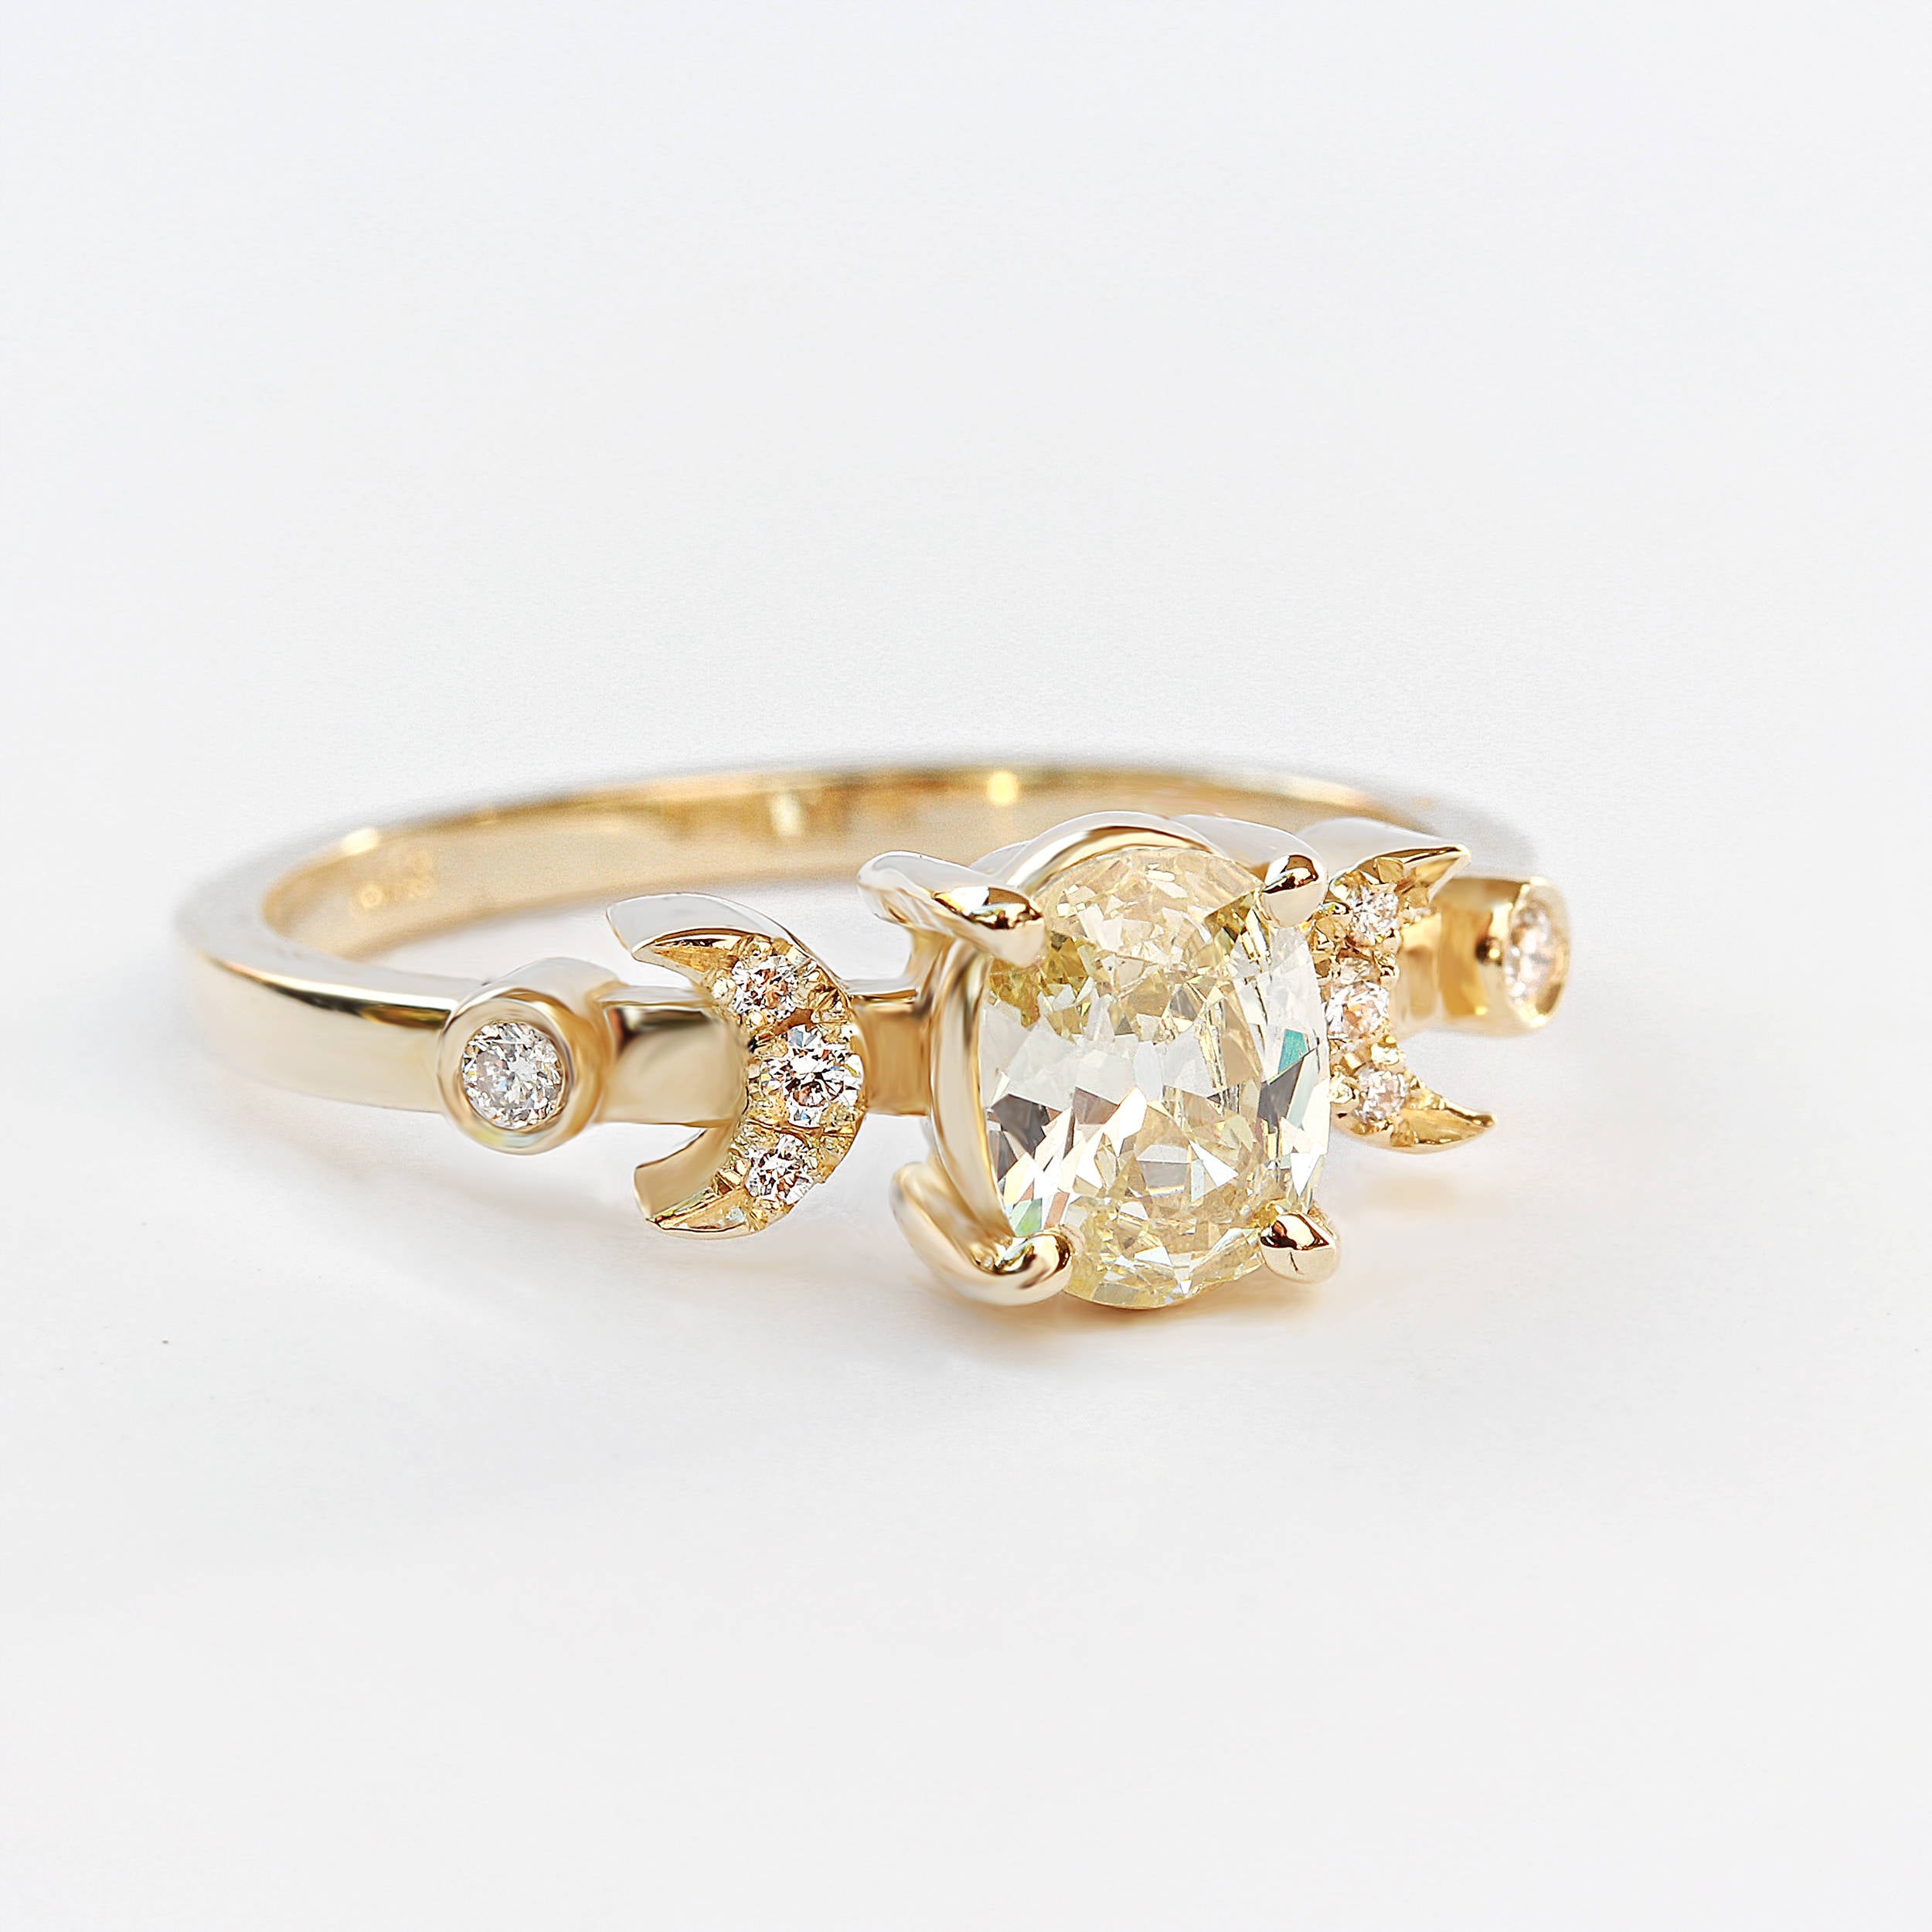 Hindi Moon phase Yellow Oval Diamond 0.66 carat Celestial Unique Engagement Ring - sillyshinydiamonds